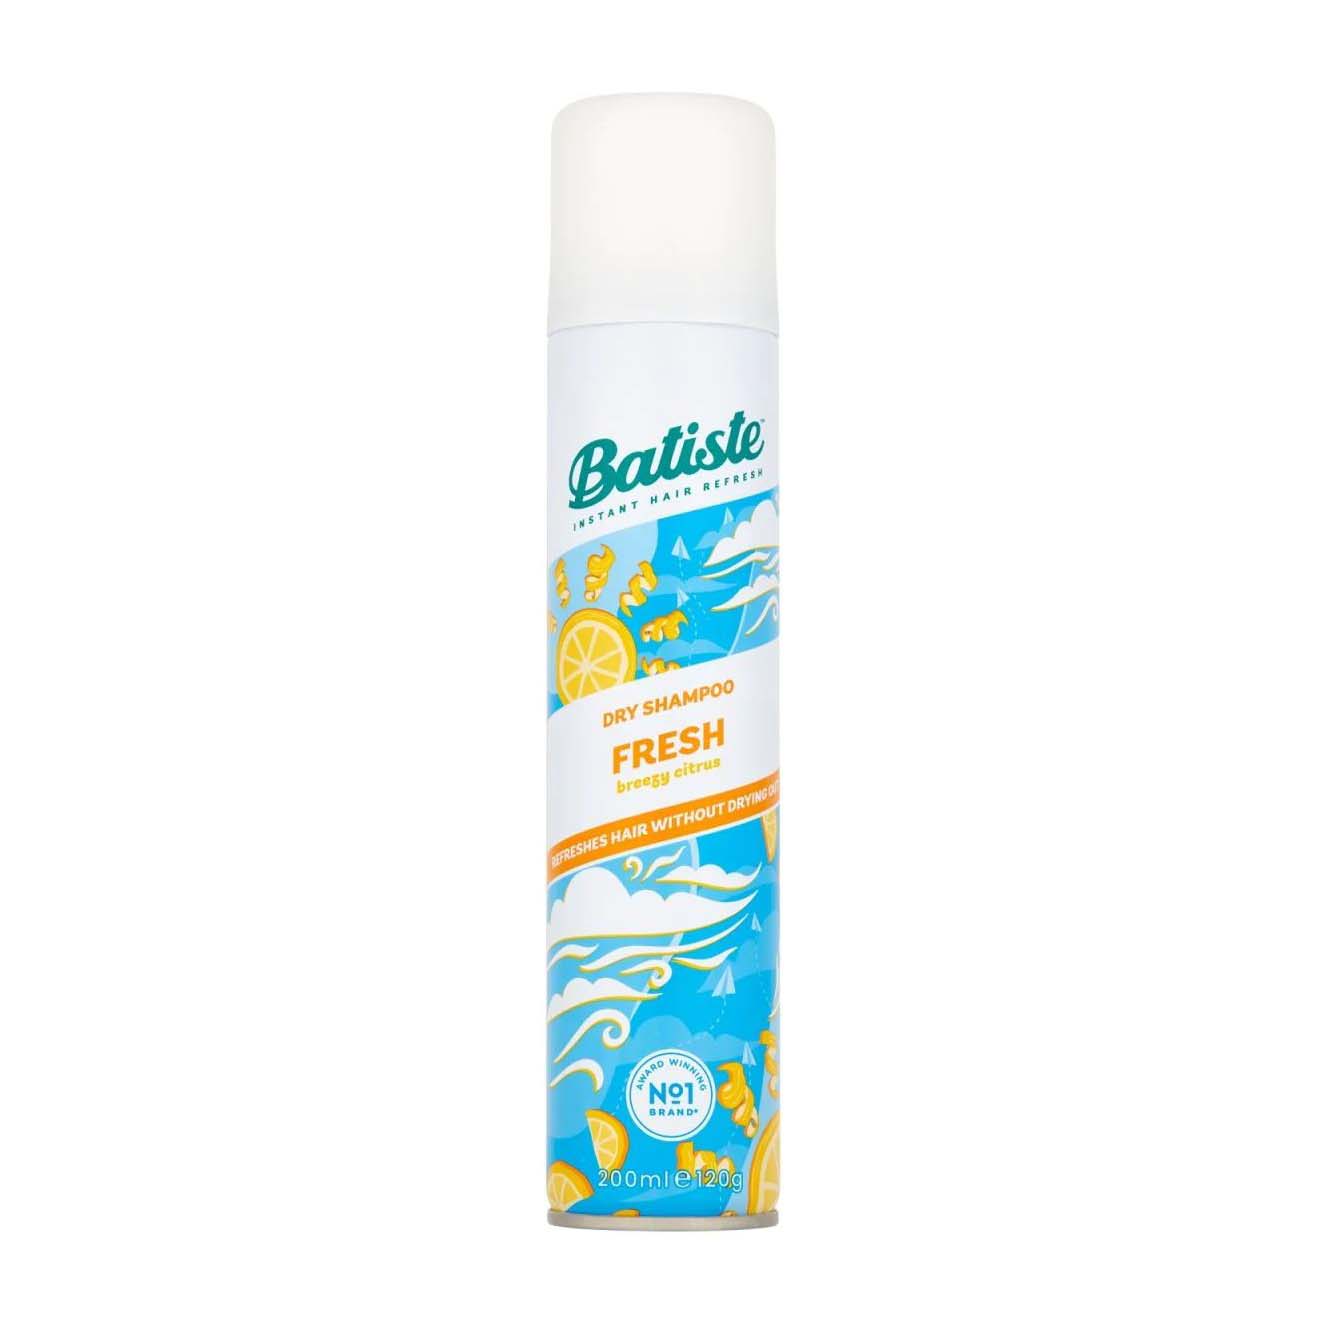 Batiste Dry Shampoo Fresh - 200ml - Bloom Pharmacy